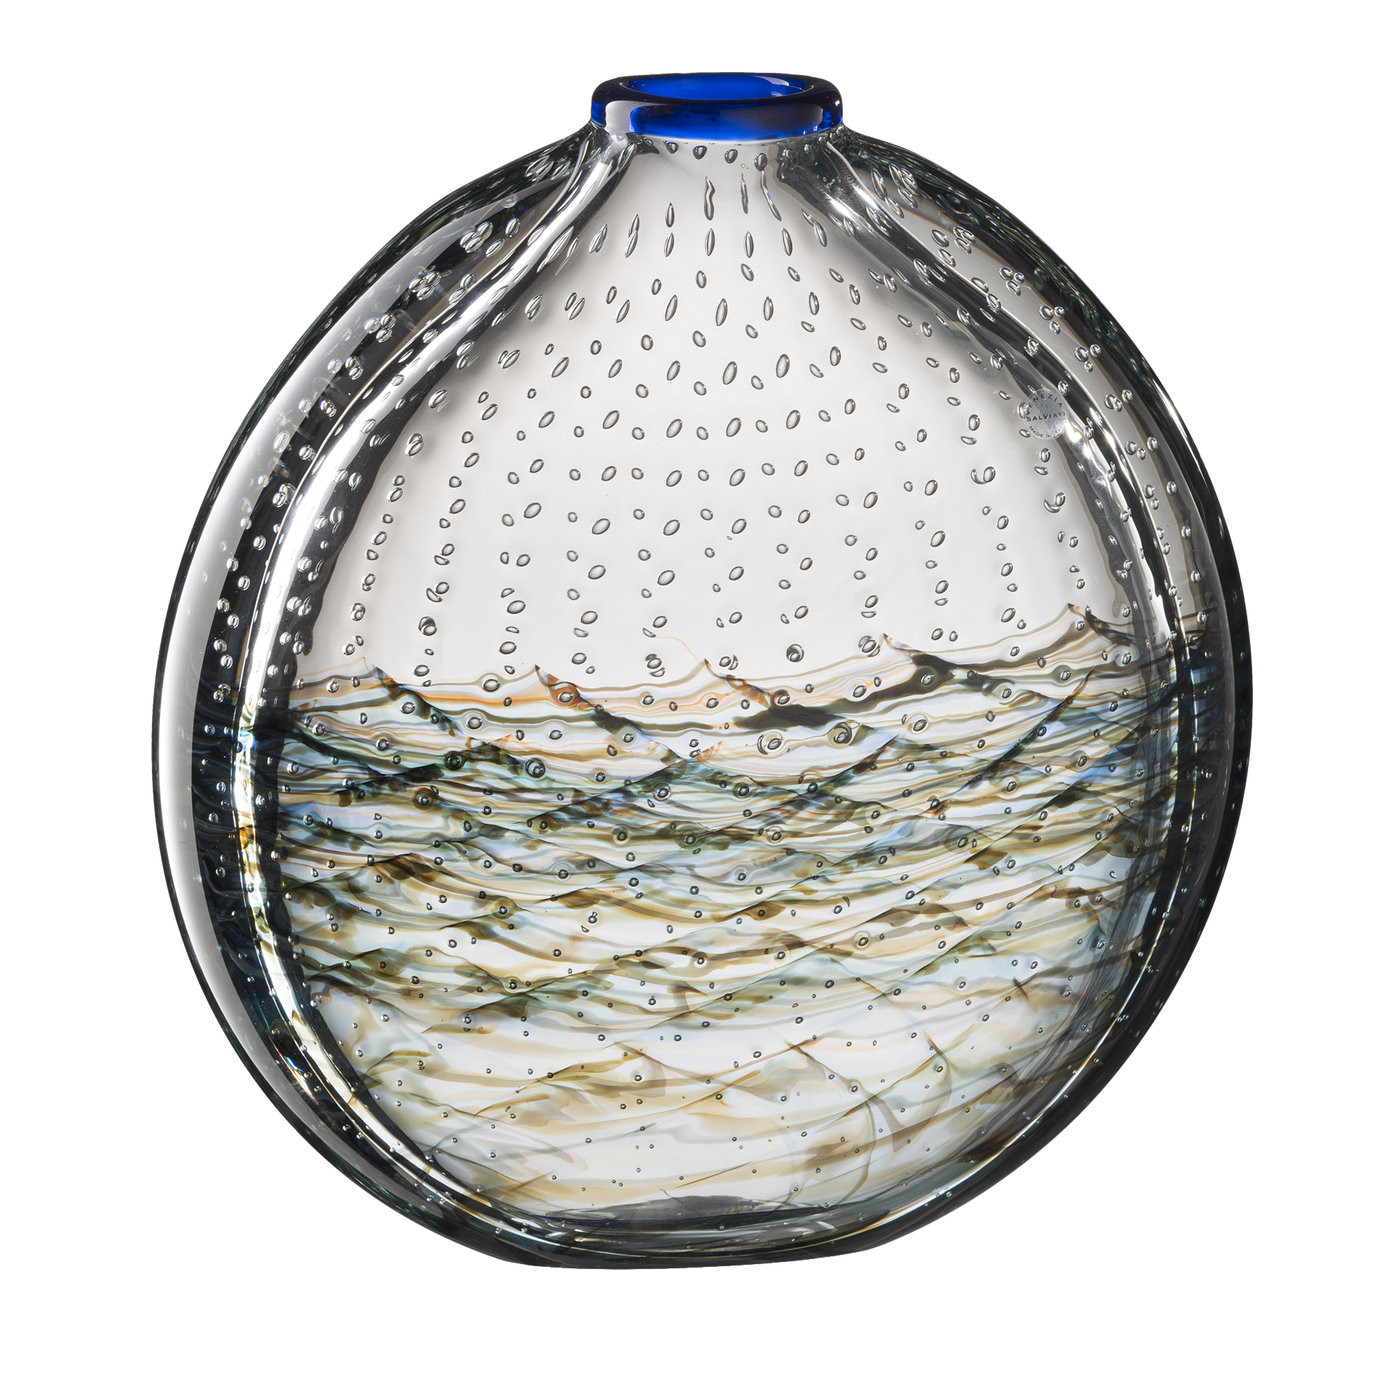 17 attractive Clear Glass Fish Vase 2024 free download clear glass fish vase of lungomare vase by berit johansson shop salviati online at artemest with saltve 01620180601 1729 1k40nio